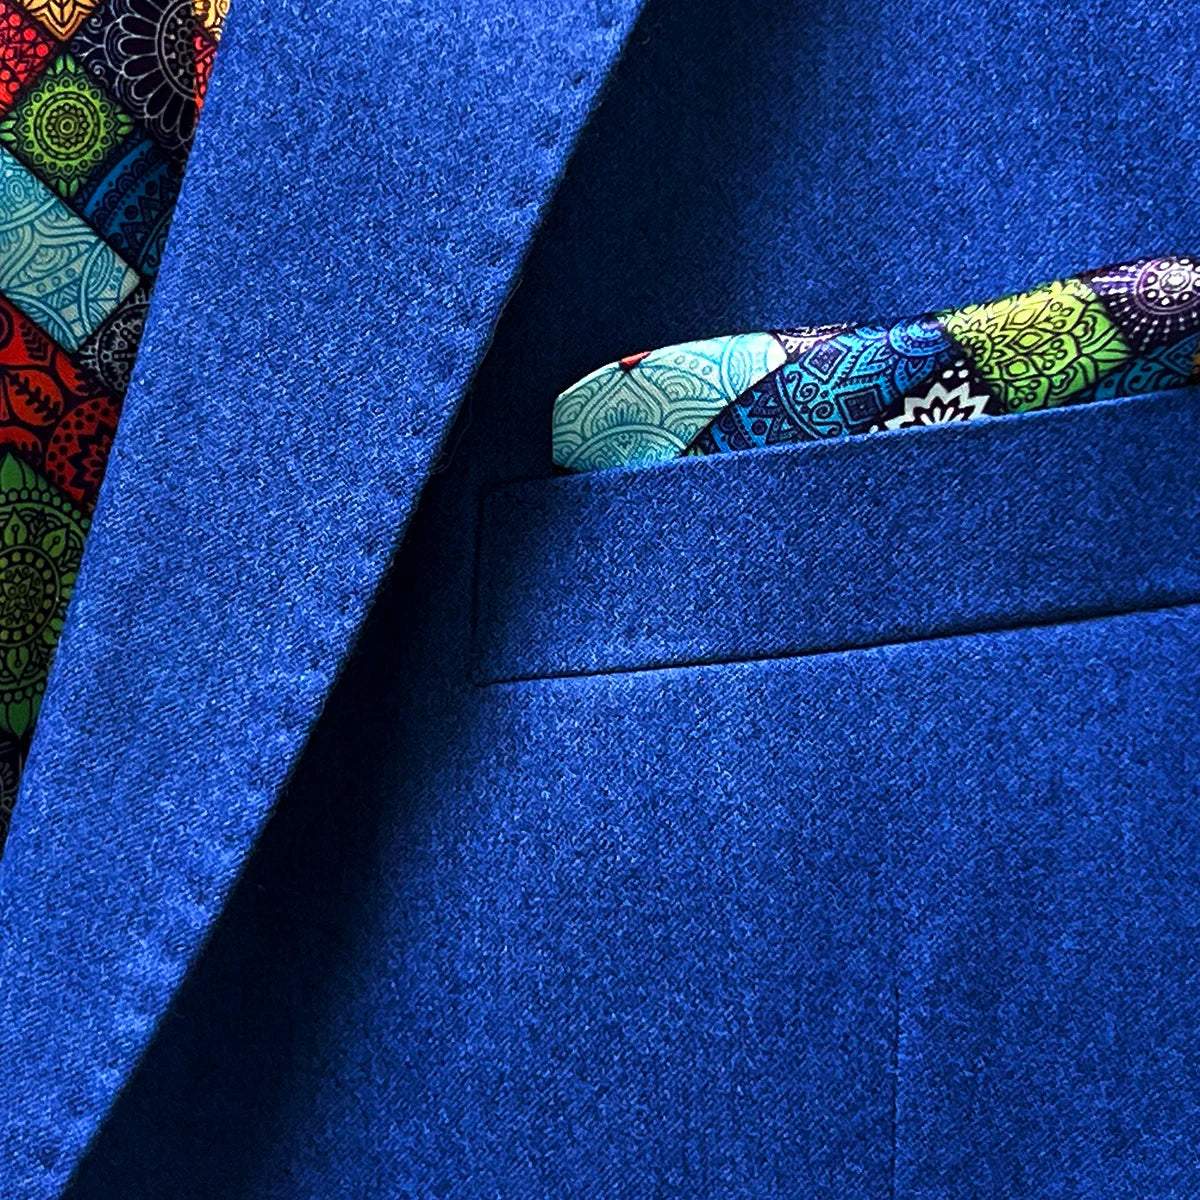 Pocket square accent on a light blue flannel suit for men.